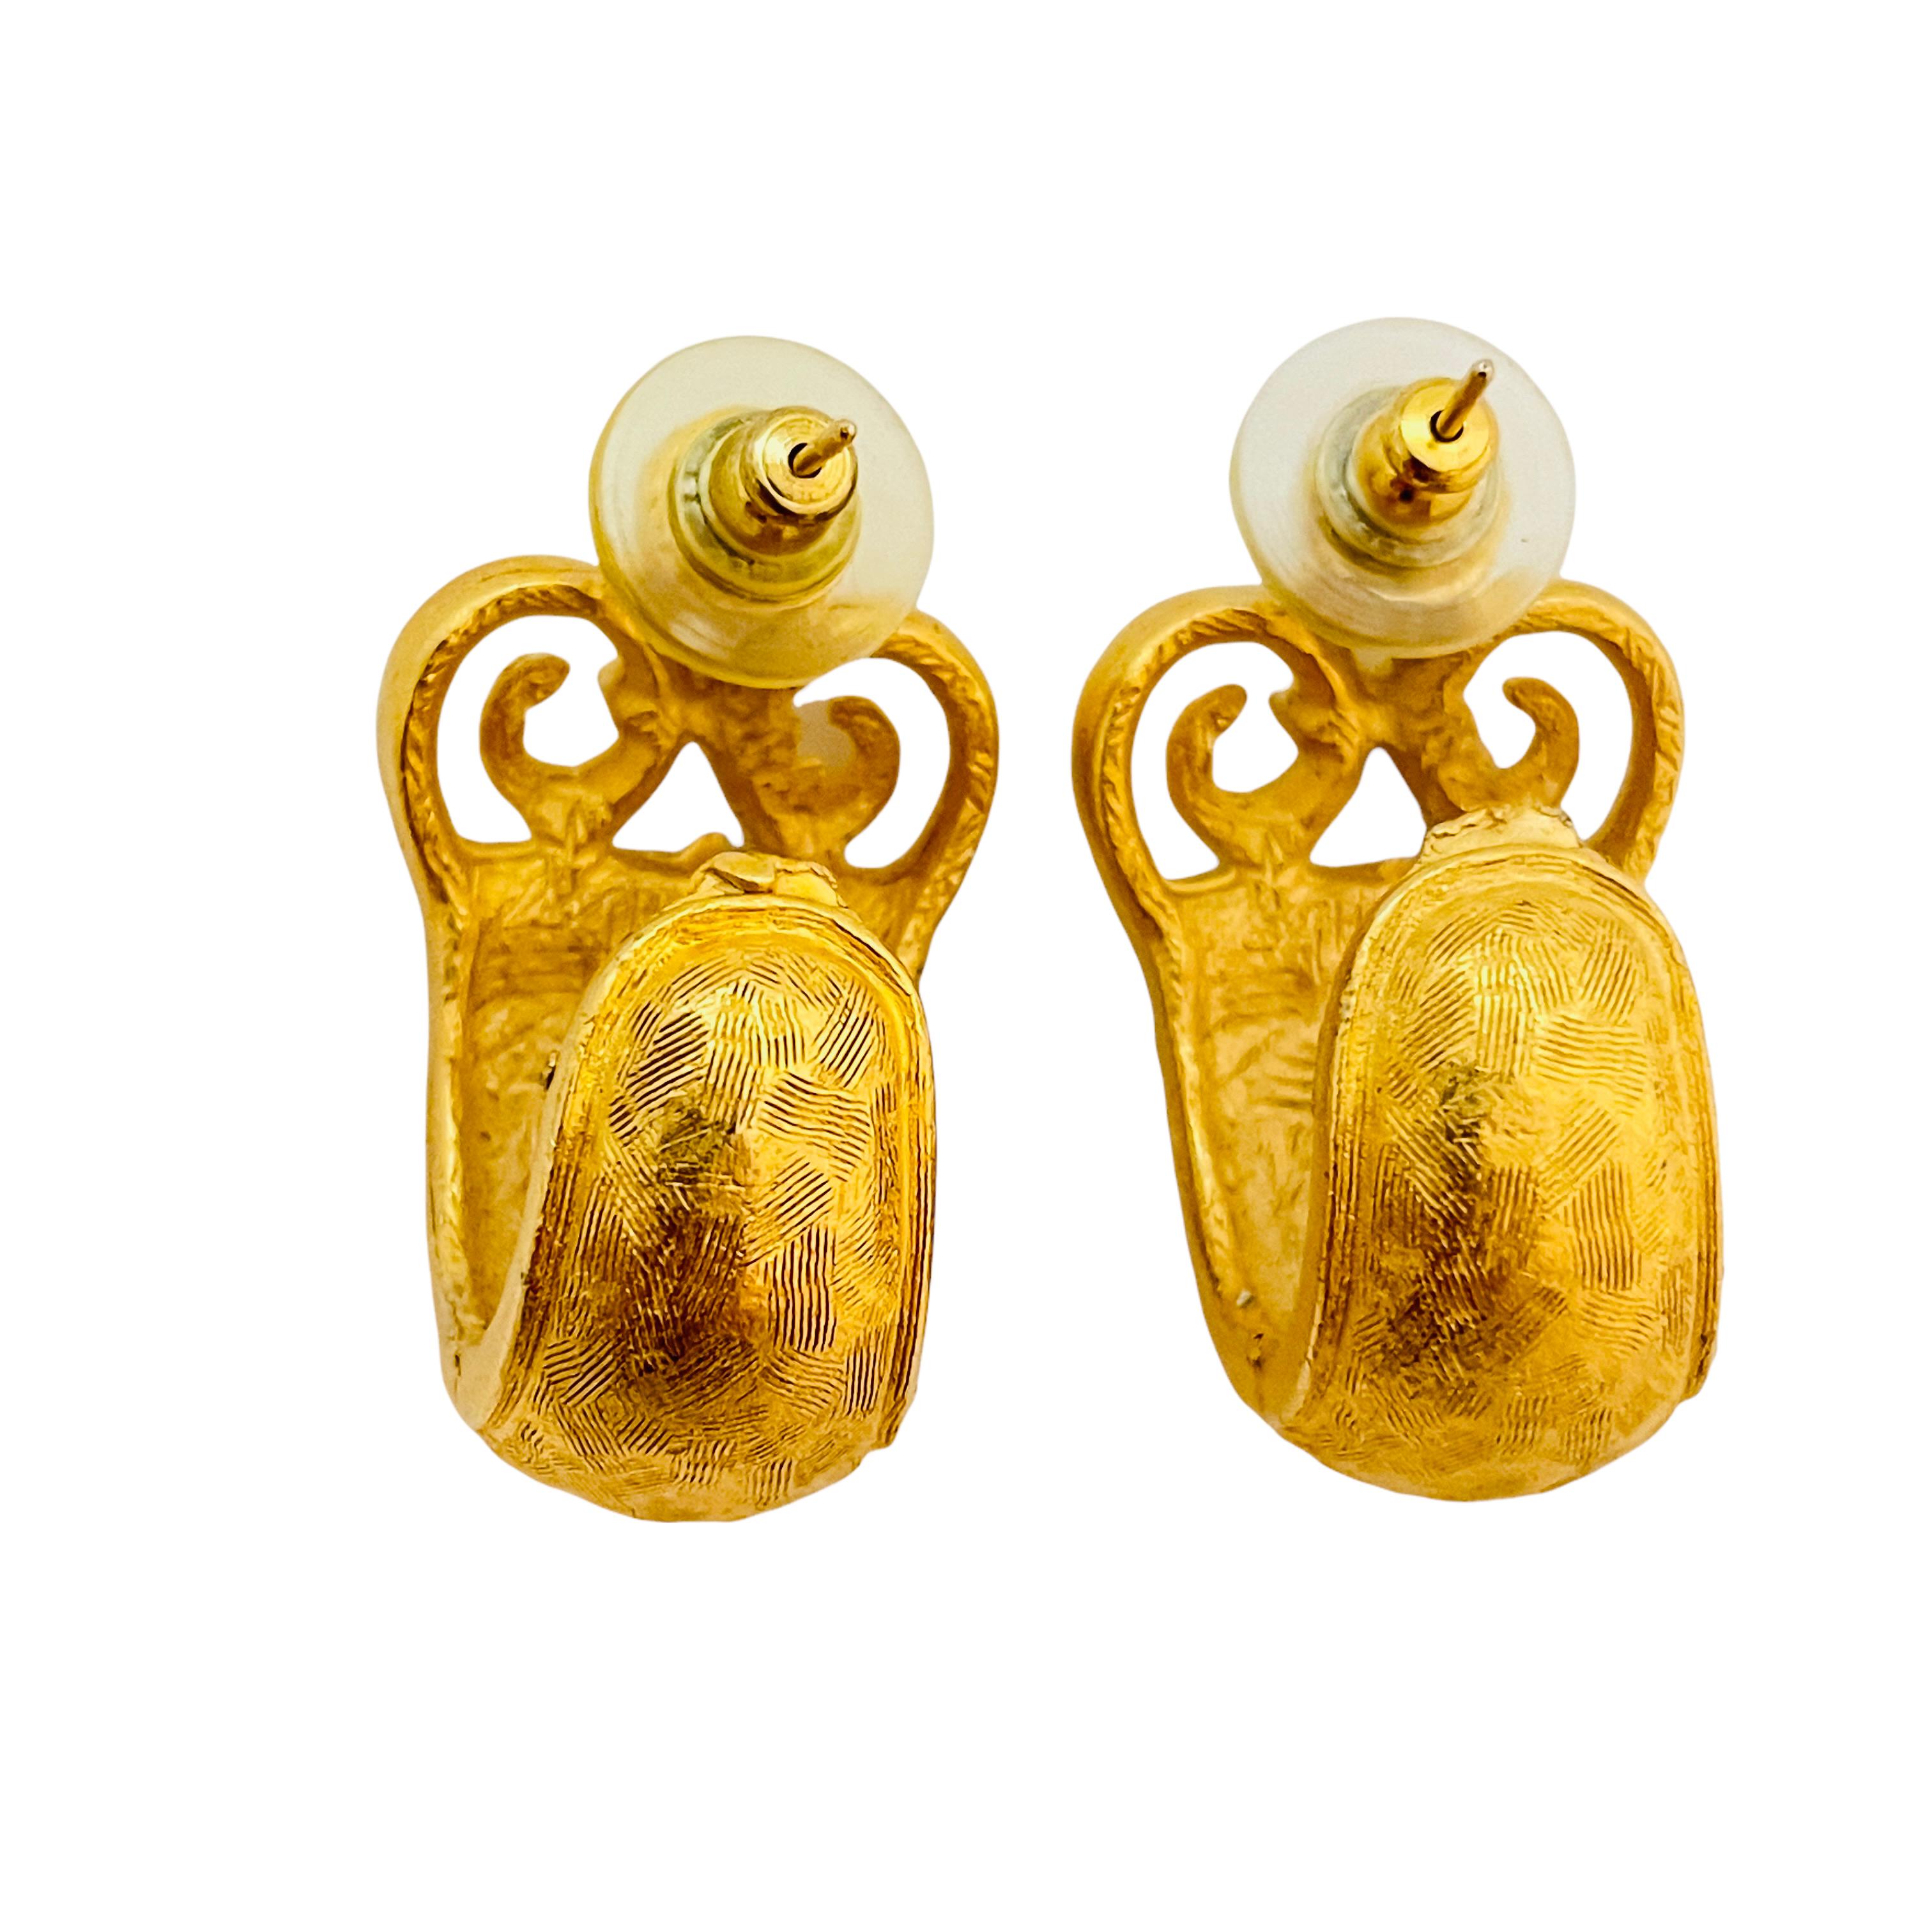 DETAILS

• unsigned

• gold tone 

• vintage designer runway earrings

MEASUREMENTS

• 1.33